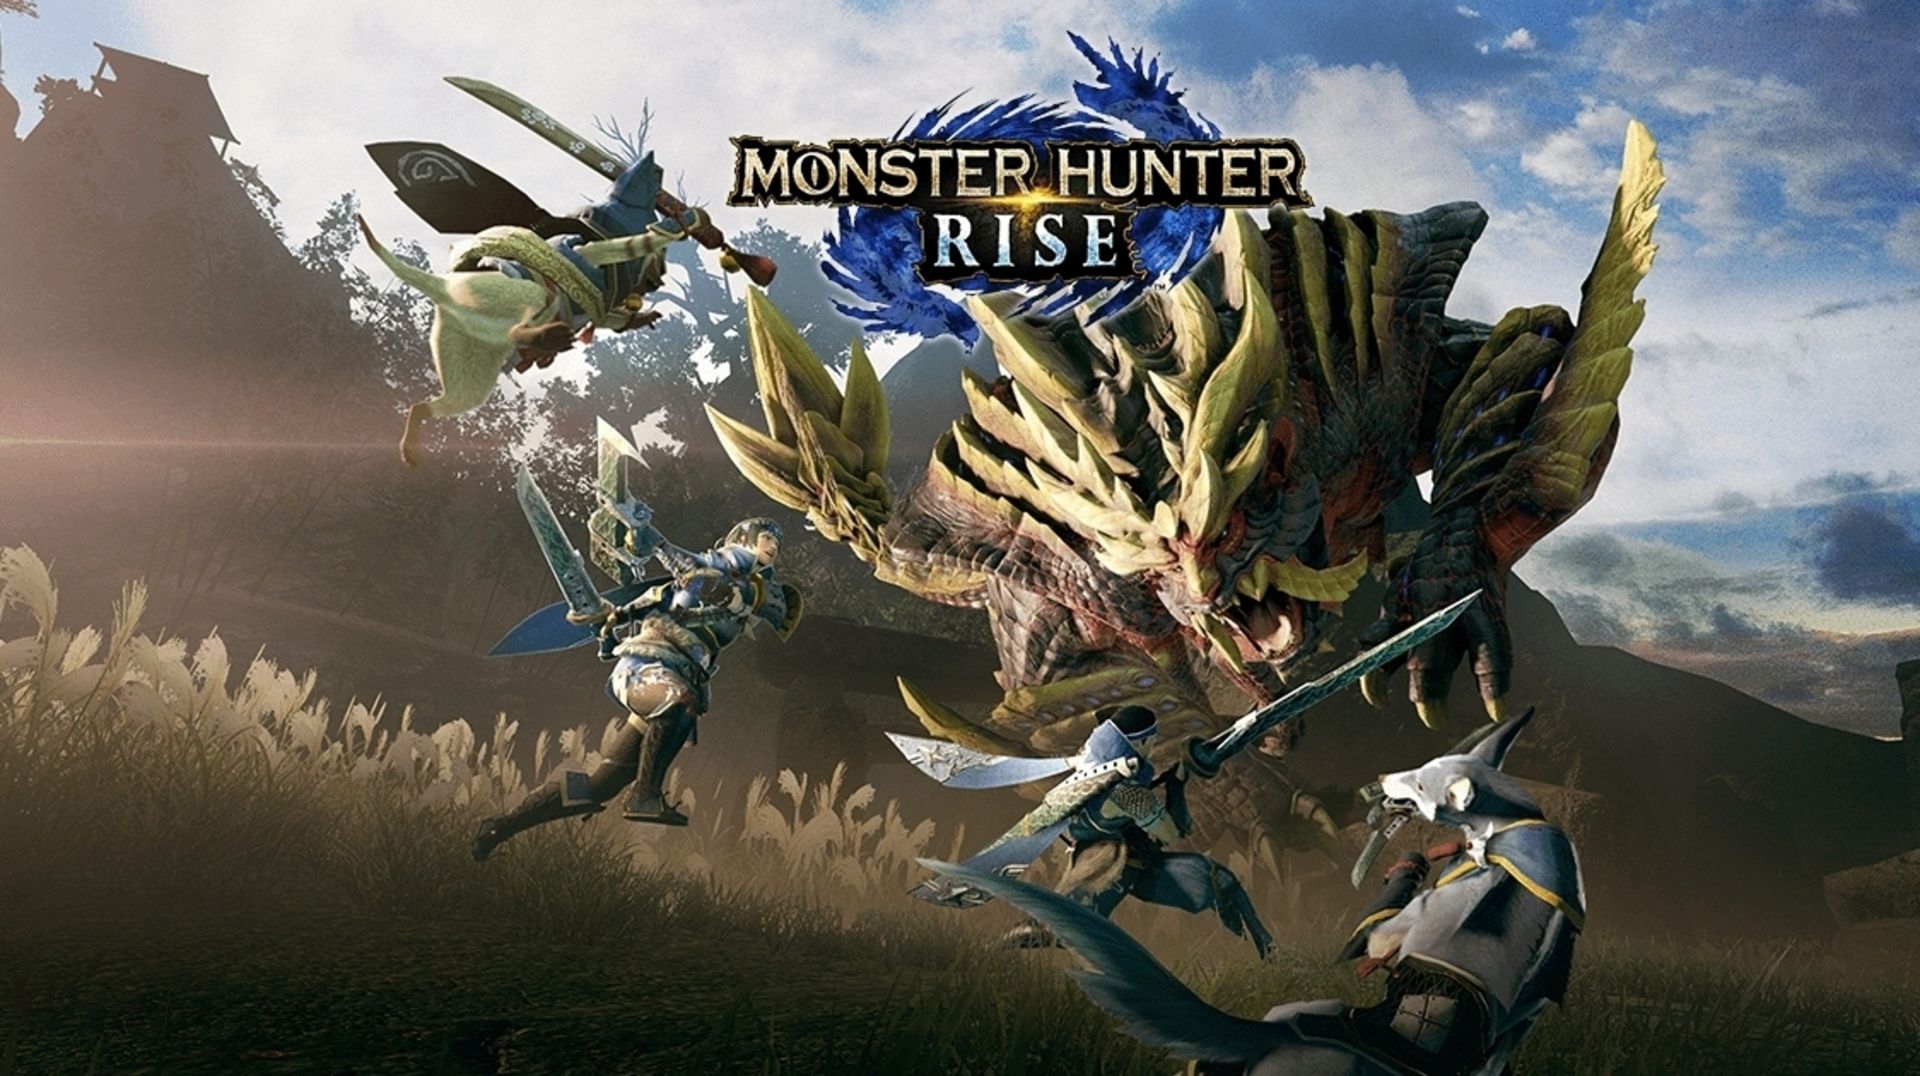 Monster Hinter Rise will get free DLC